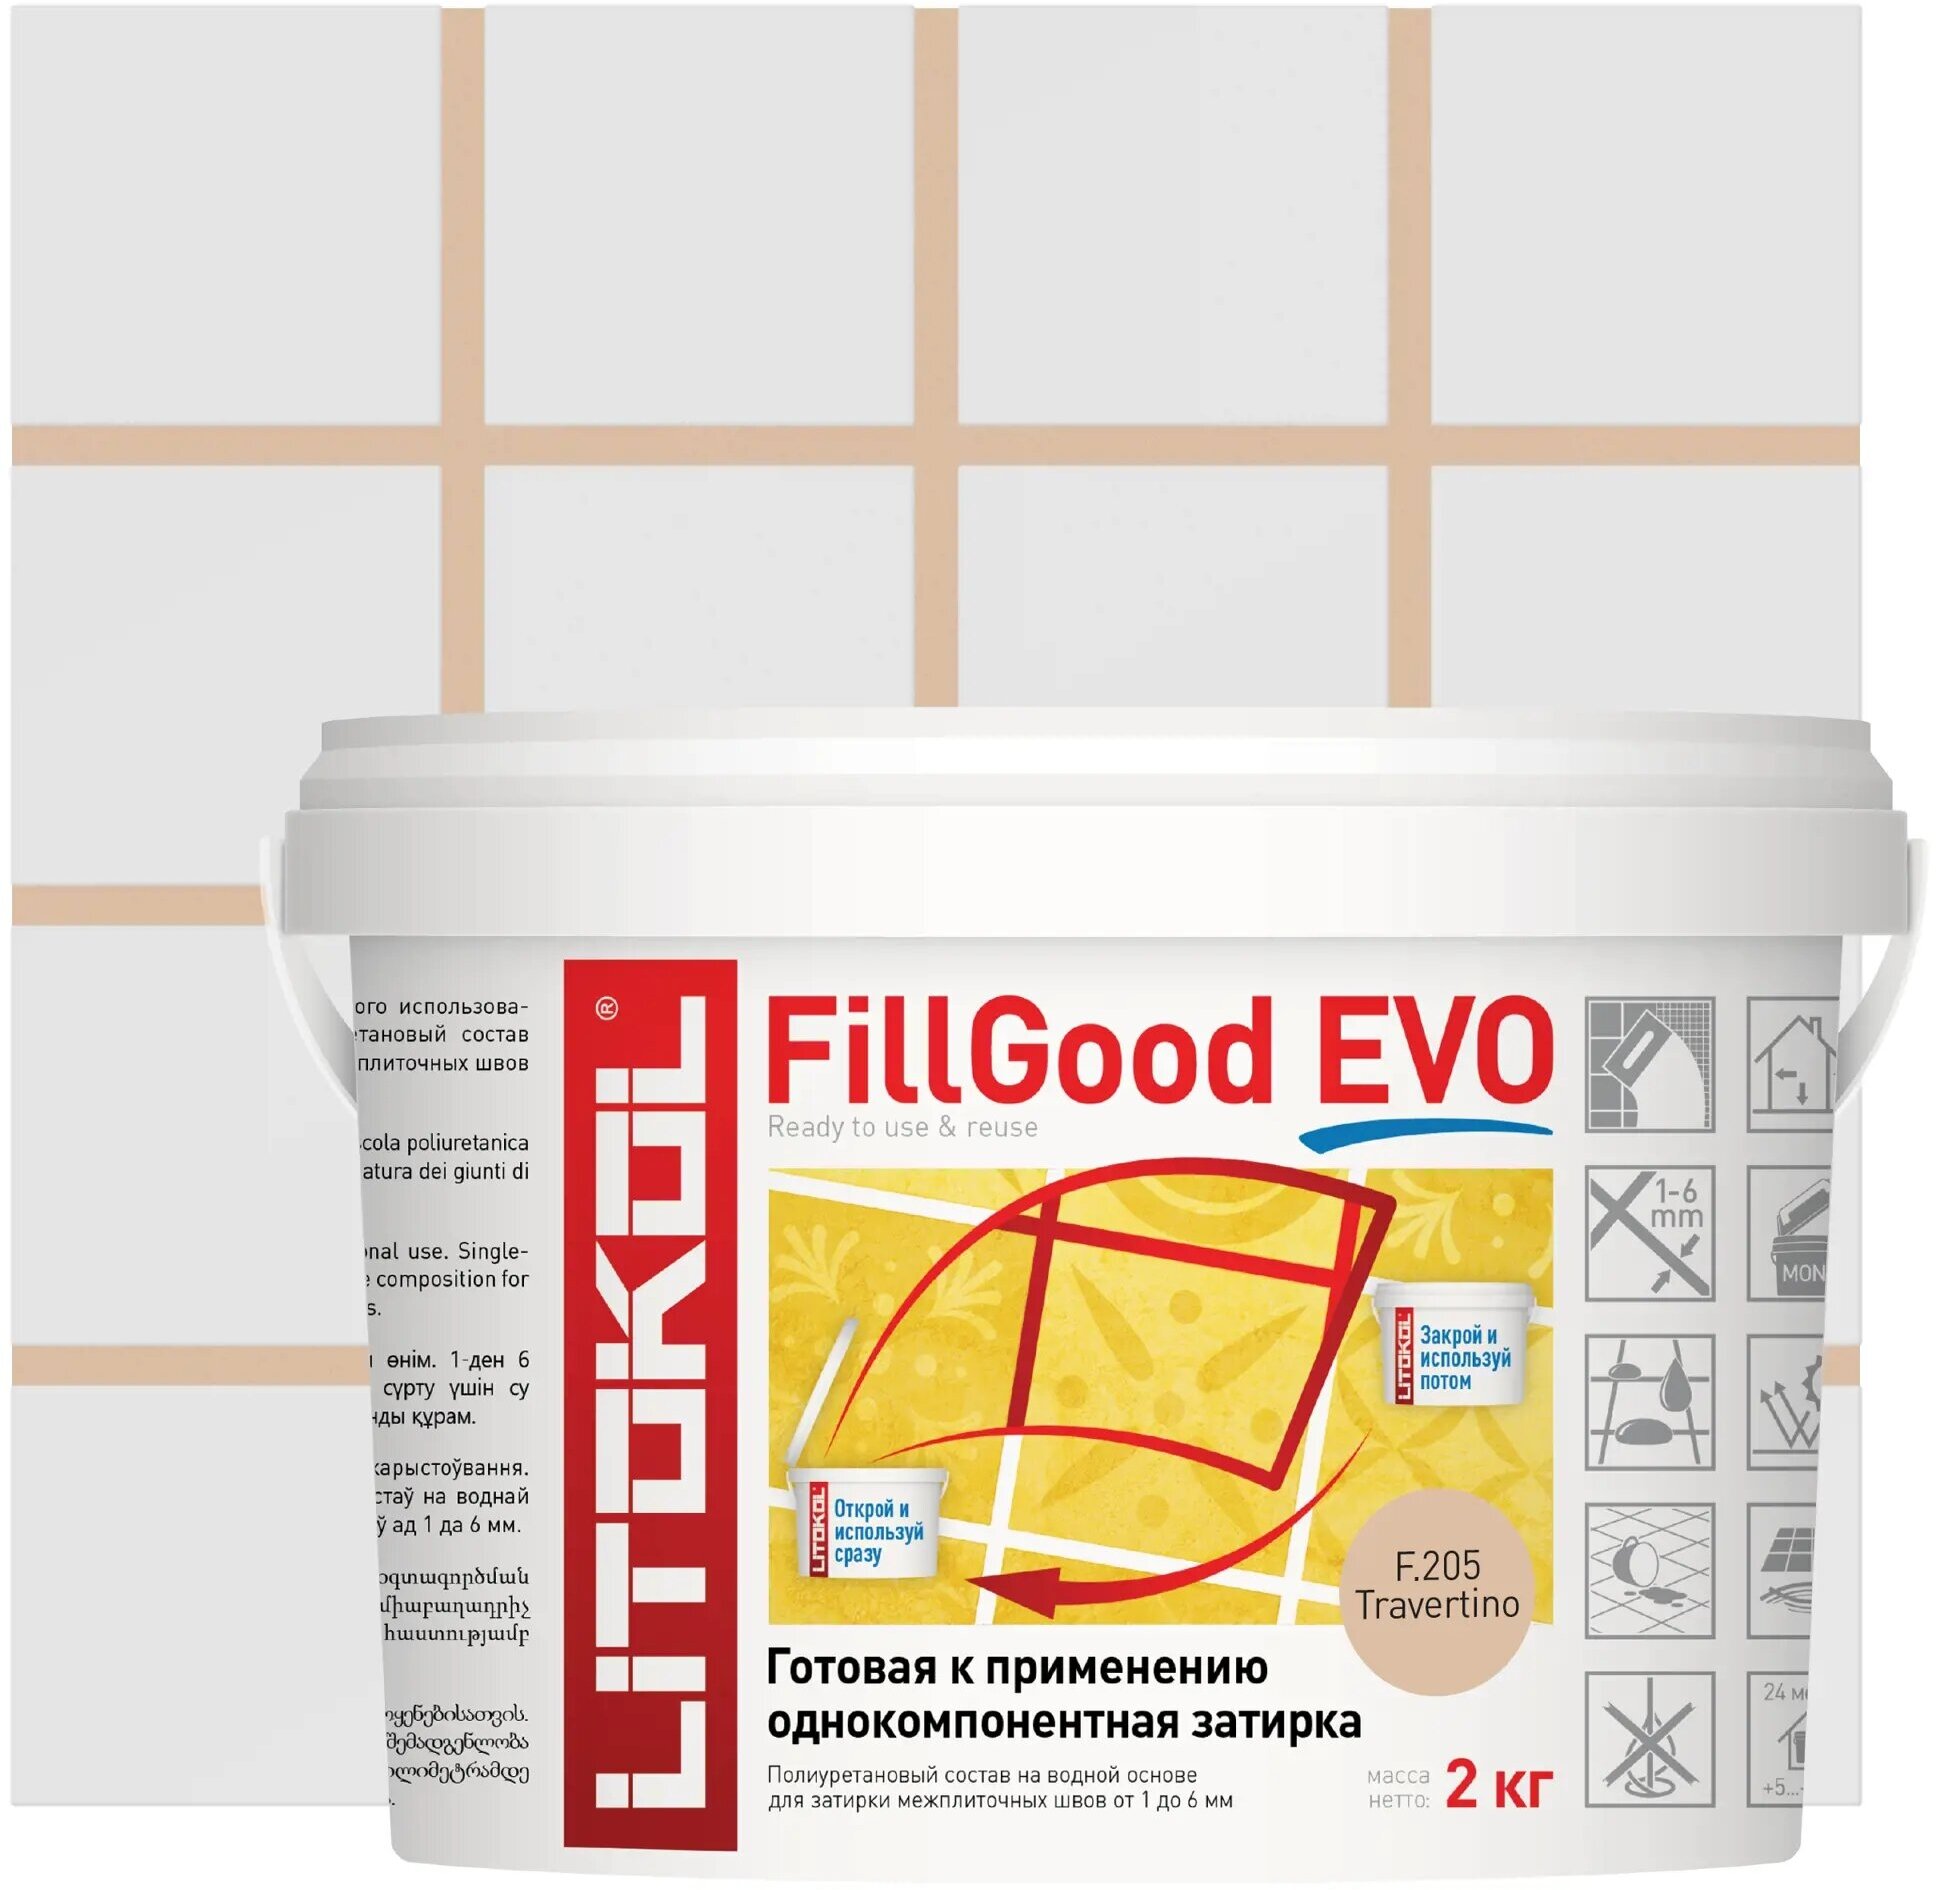 Затирка полиуретановая Litokol Fillgood Evo F210 цвет серо-бежевый 2 кг - фото №1